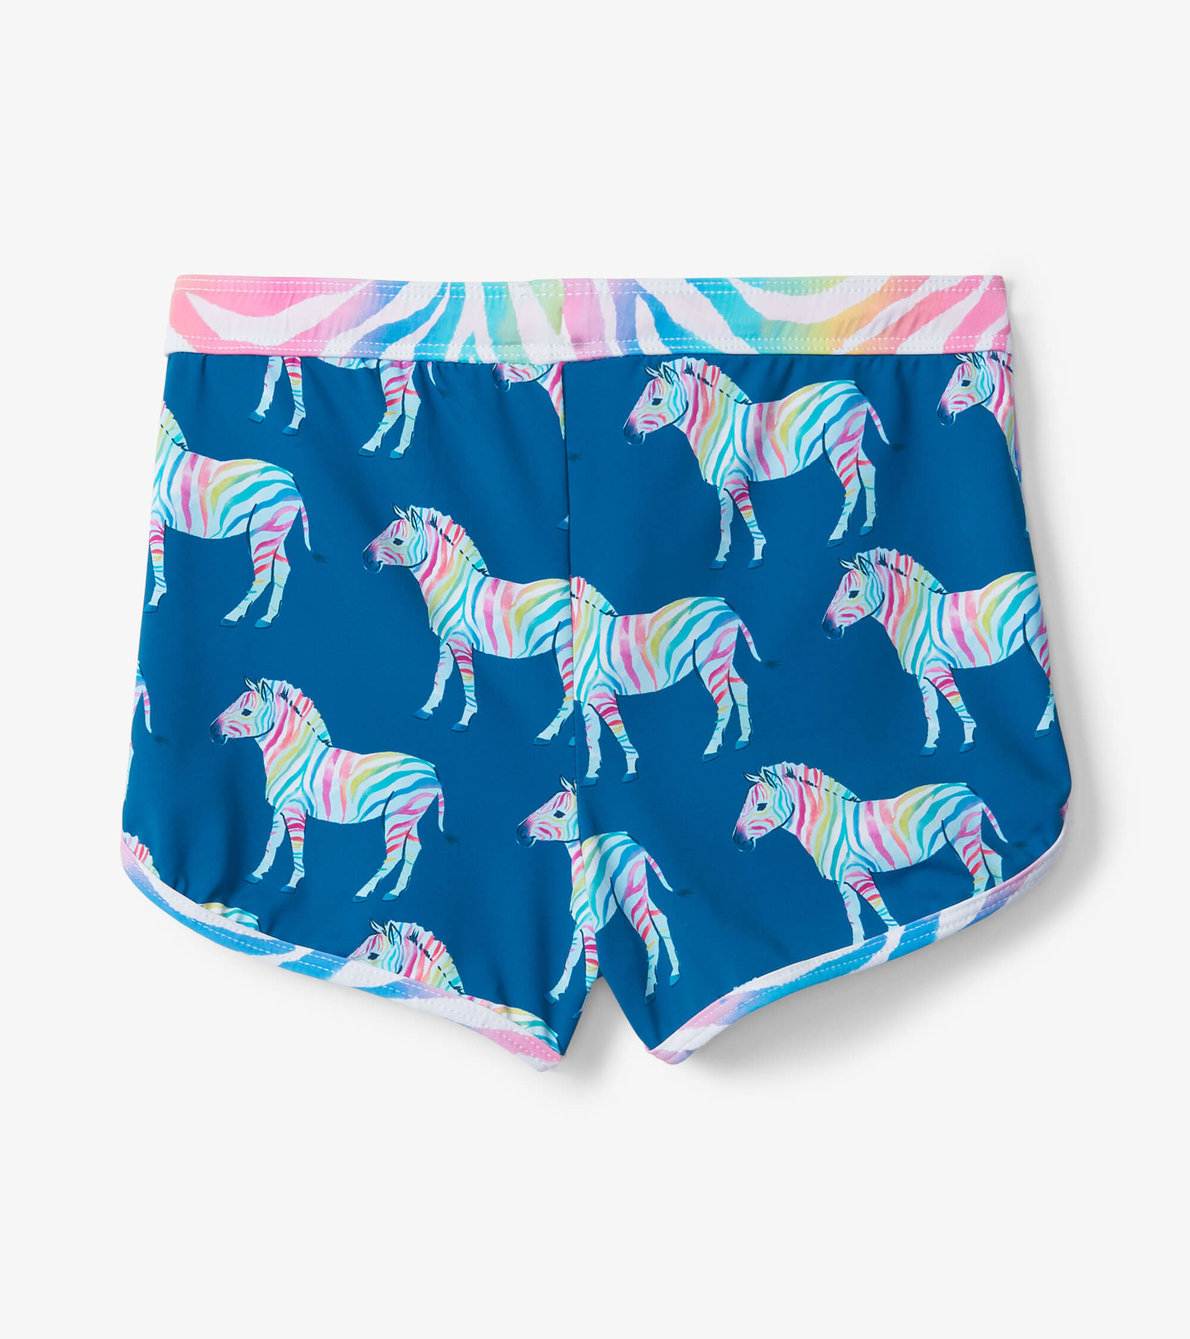 View larger image of Rainbow Zebra Swim Shorts